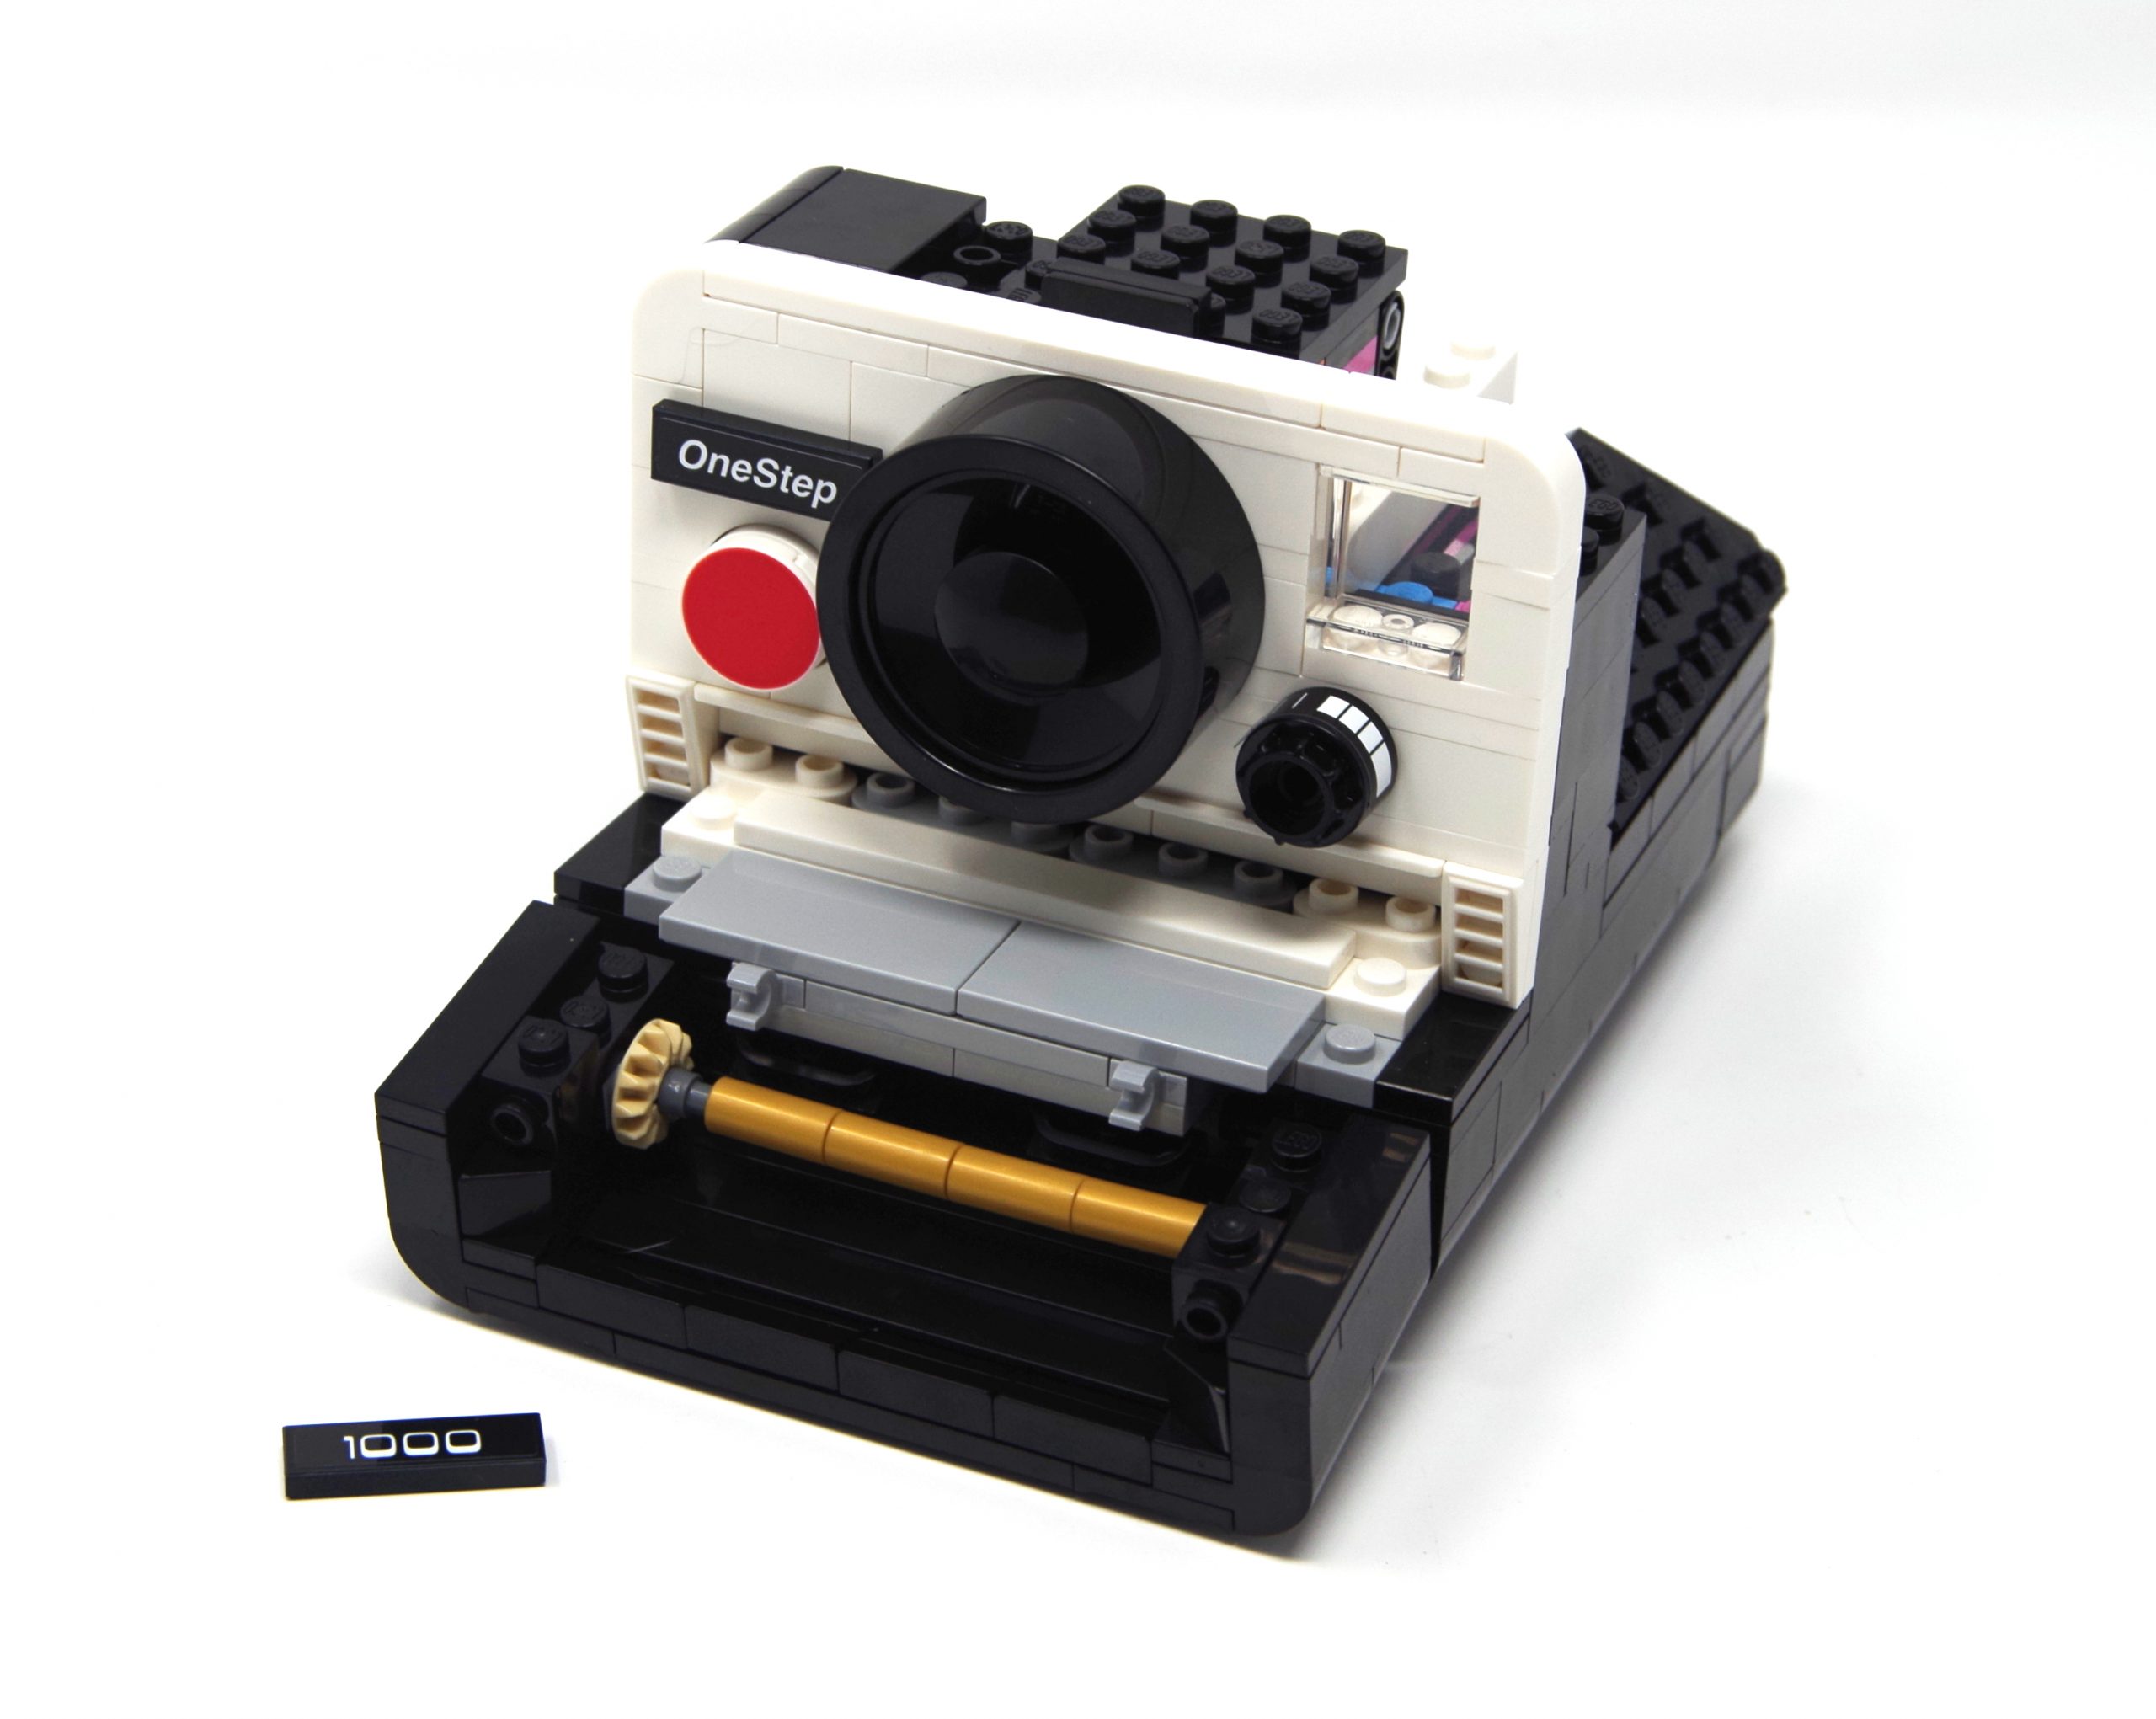 LEGO Polaroid Camera Review - Brickhubs